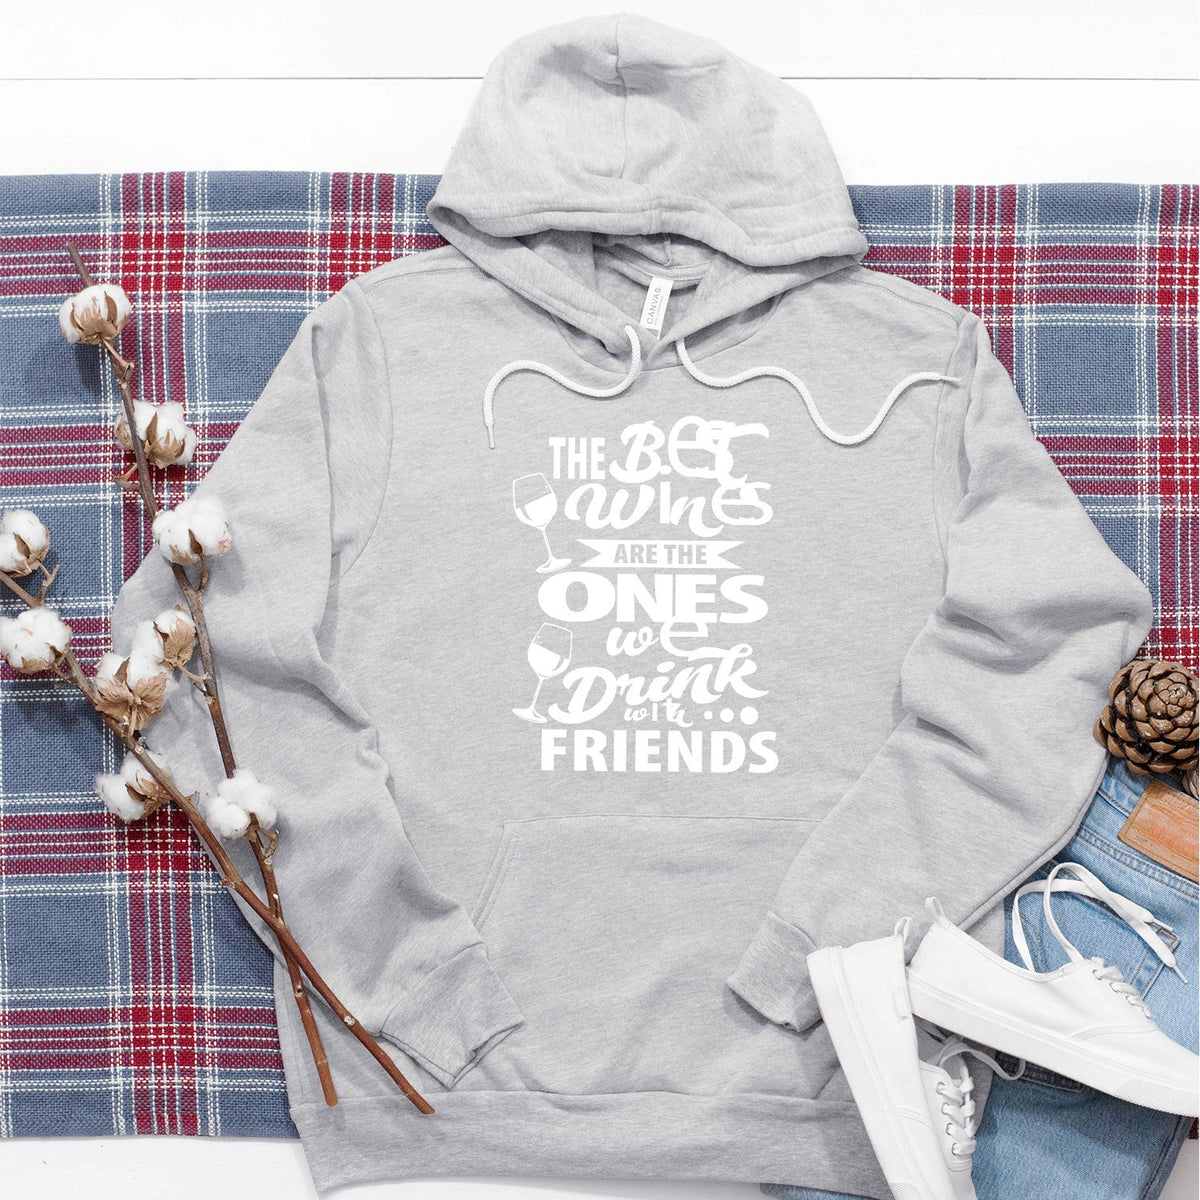 The Best Wines Are The Ones We Drink With Friends - Hoodie Sweatshirt